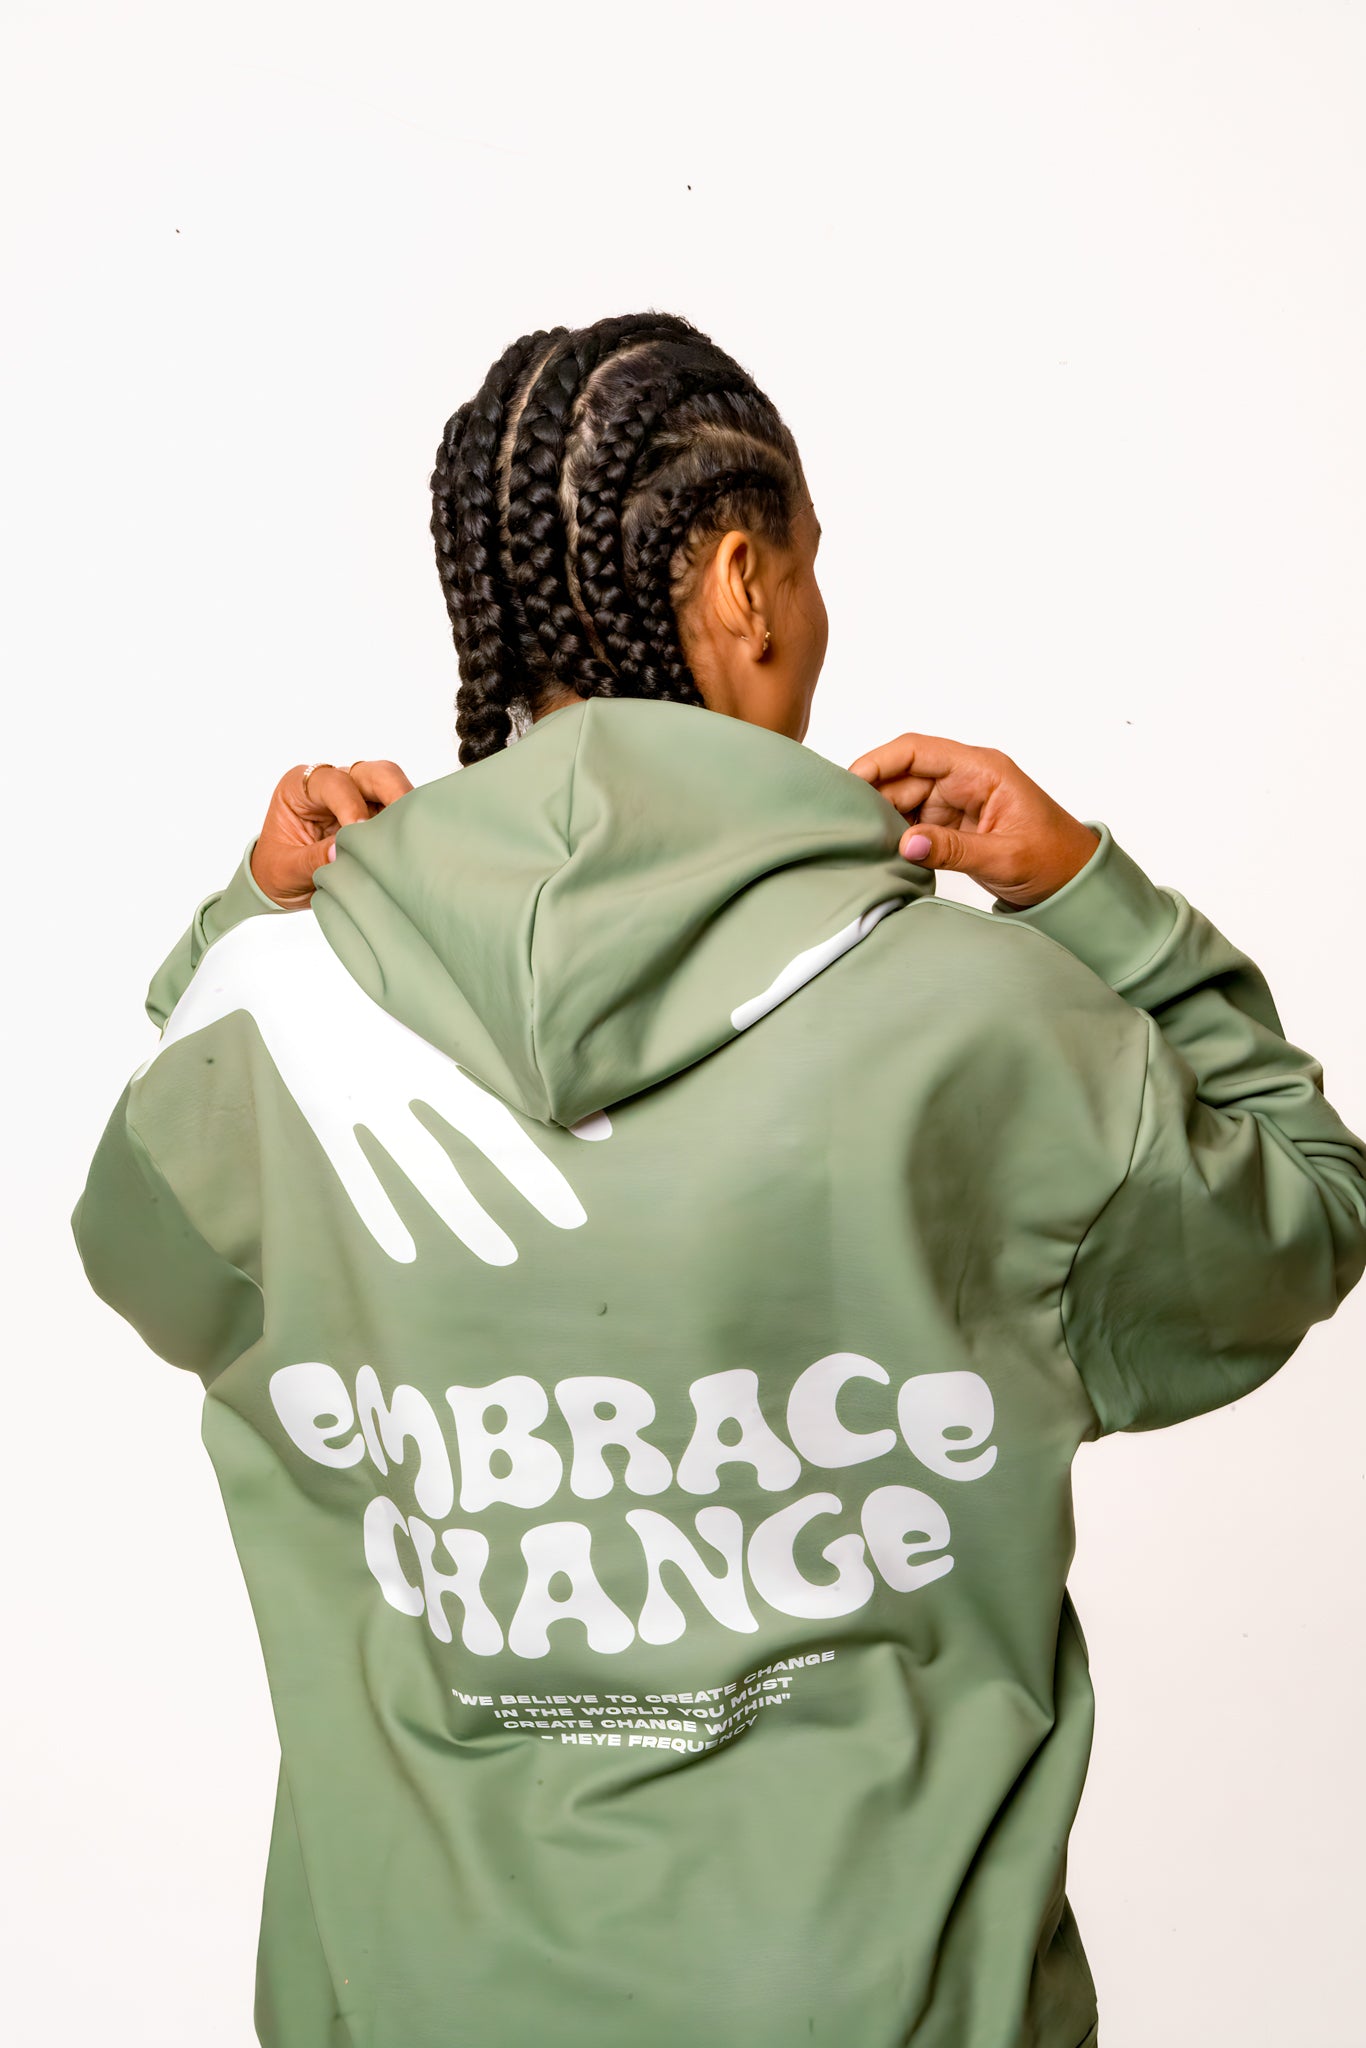 'Embrace Change' Hoodie